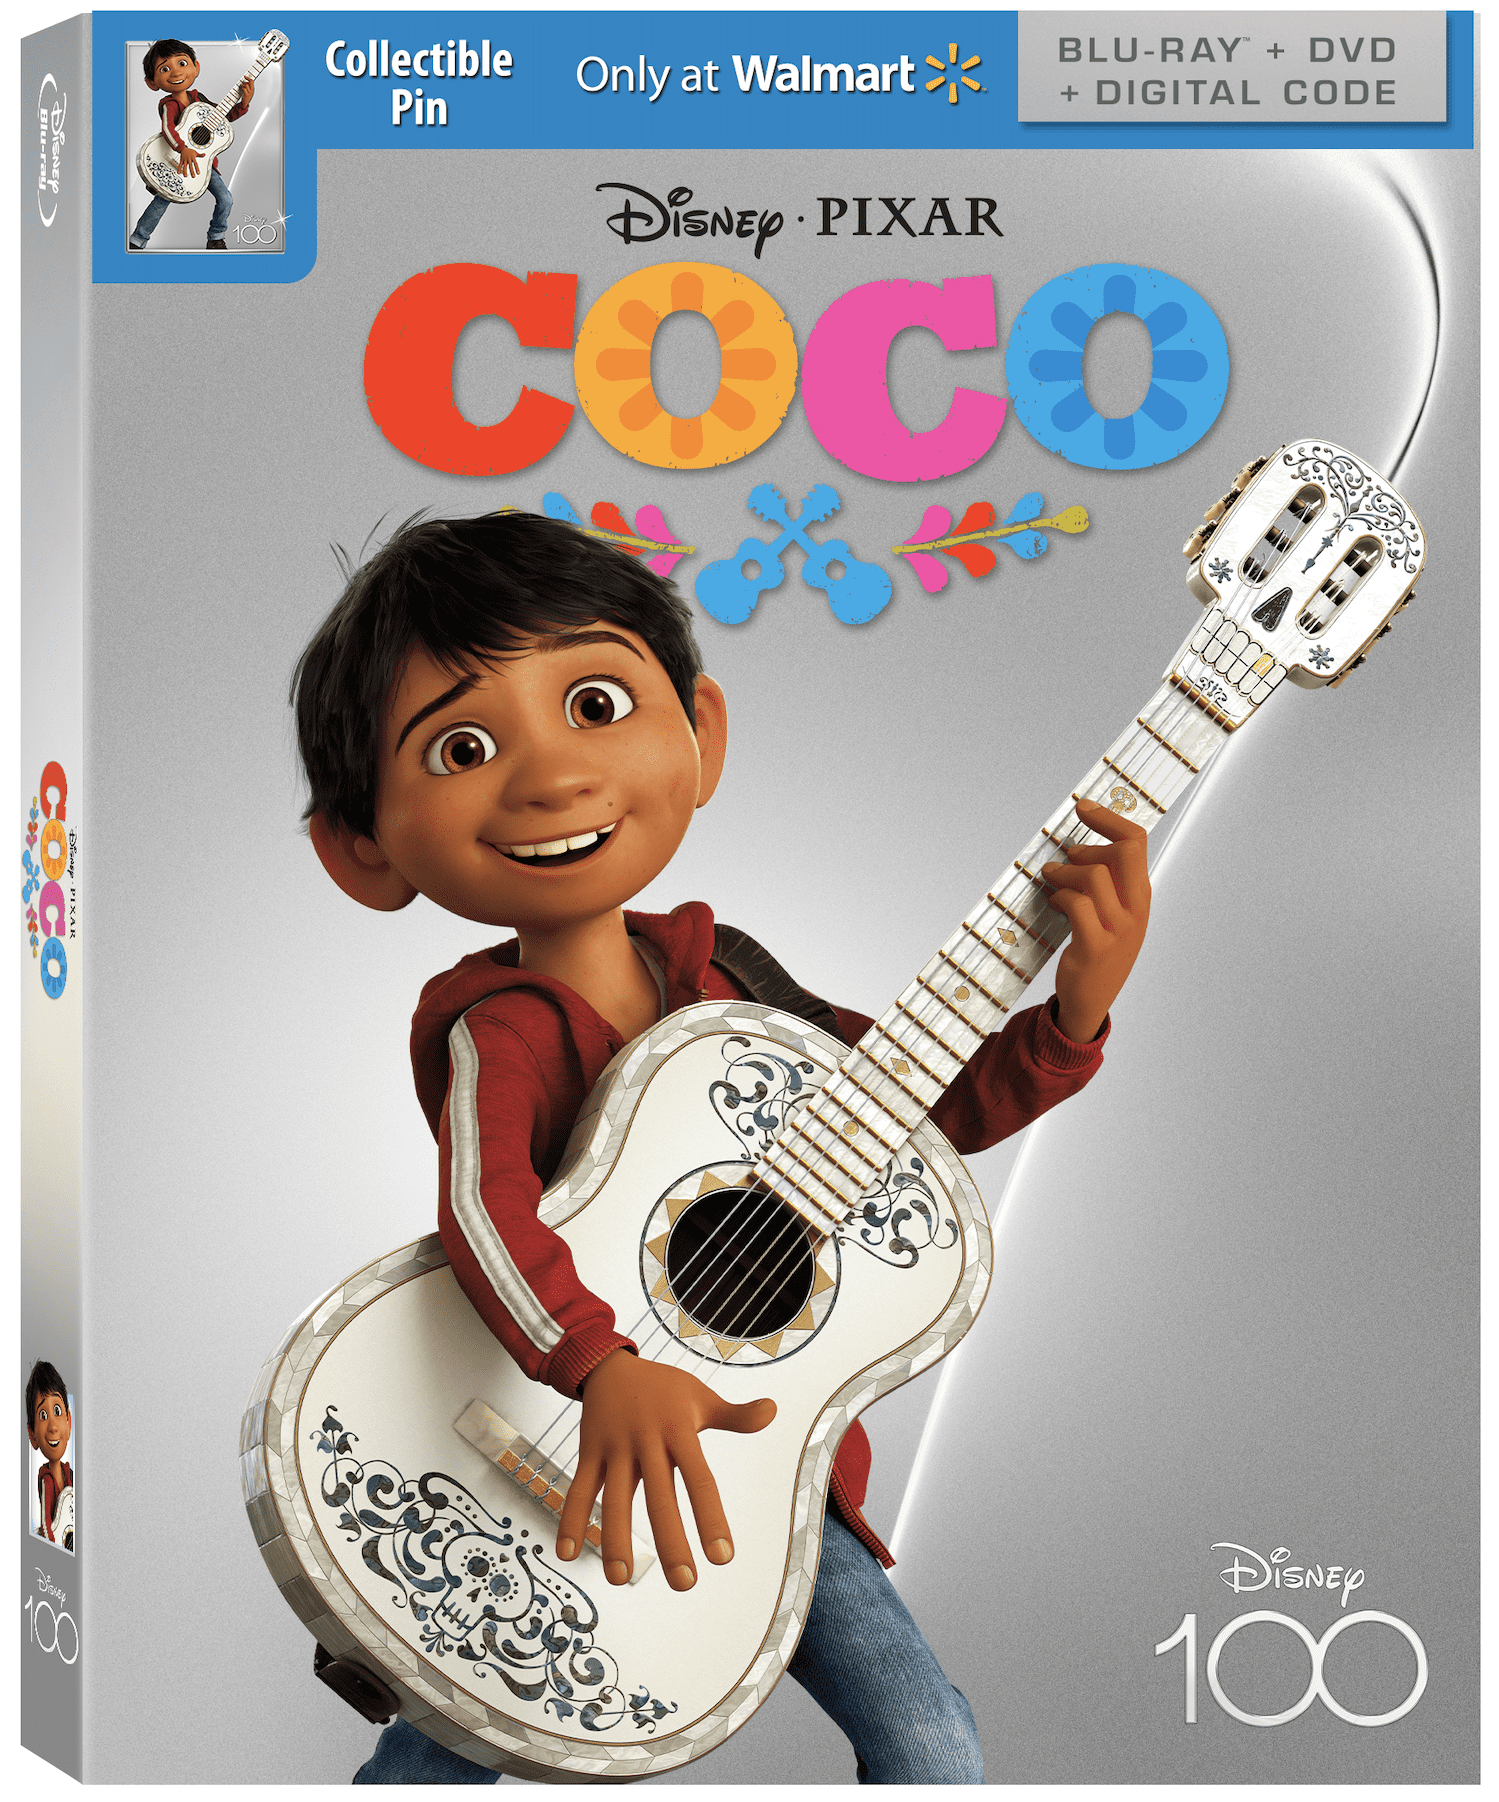 Toy Story - Disney100 Edition Walmart Exclusive (Blu-ray + DVD + Digital  Code)